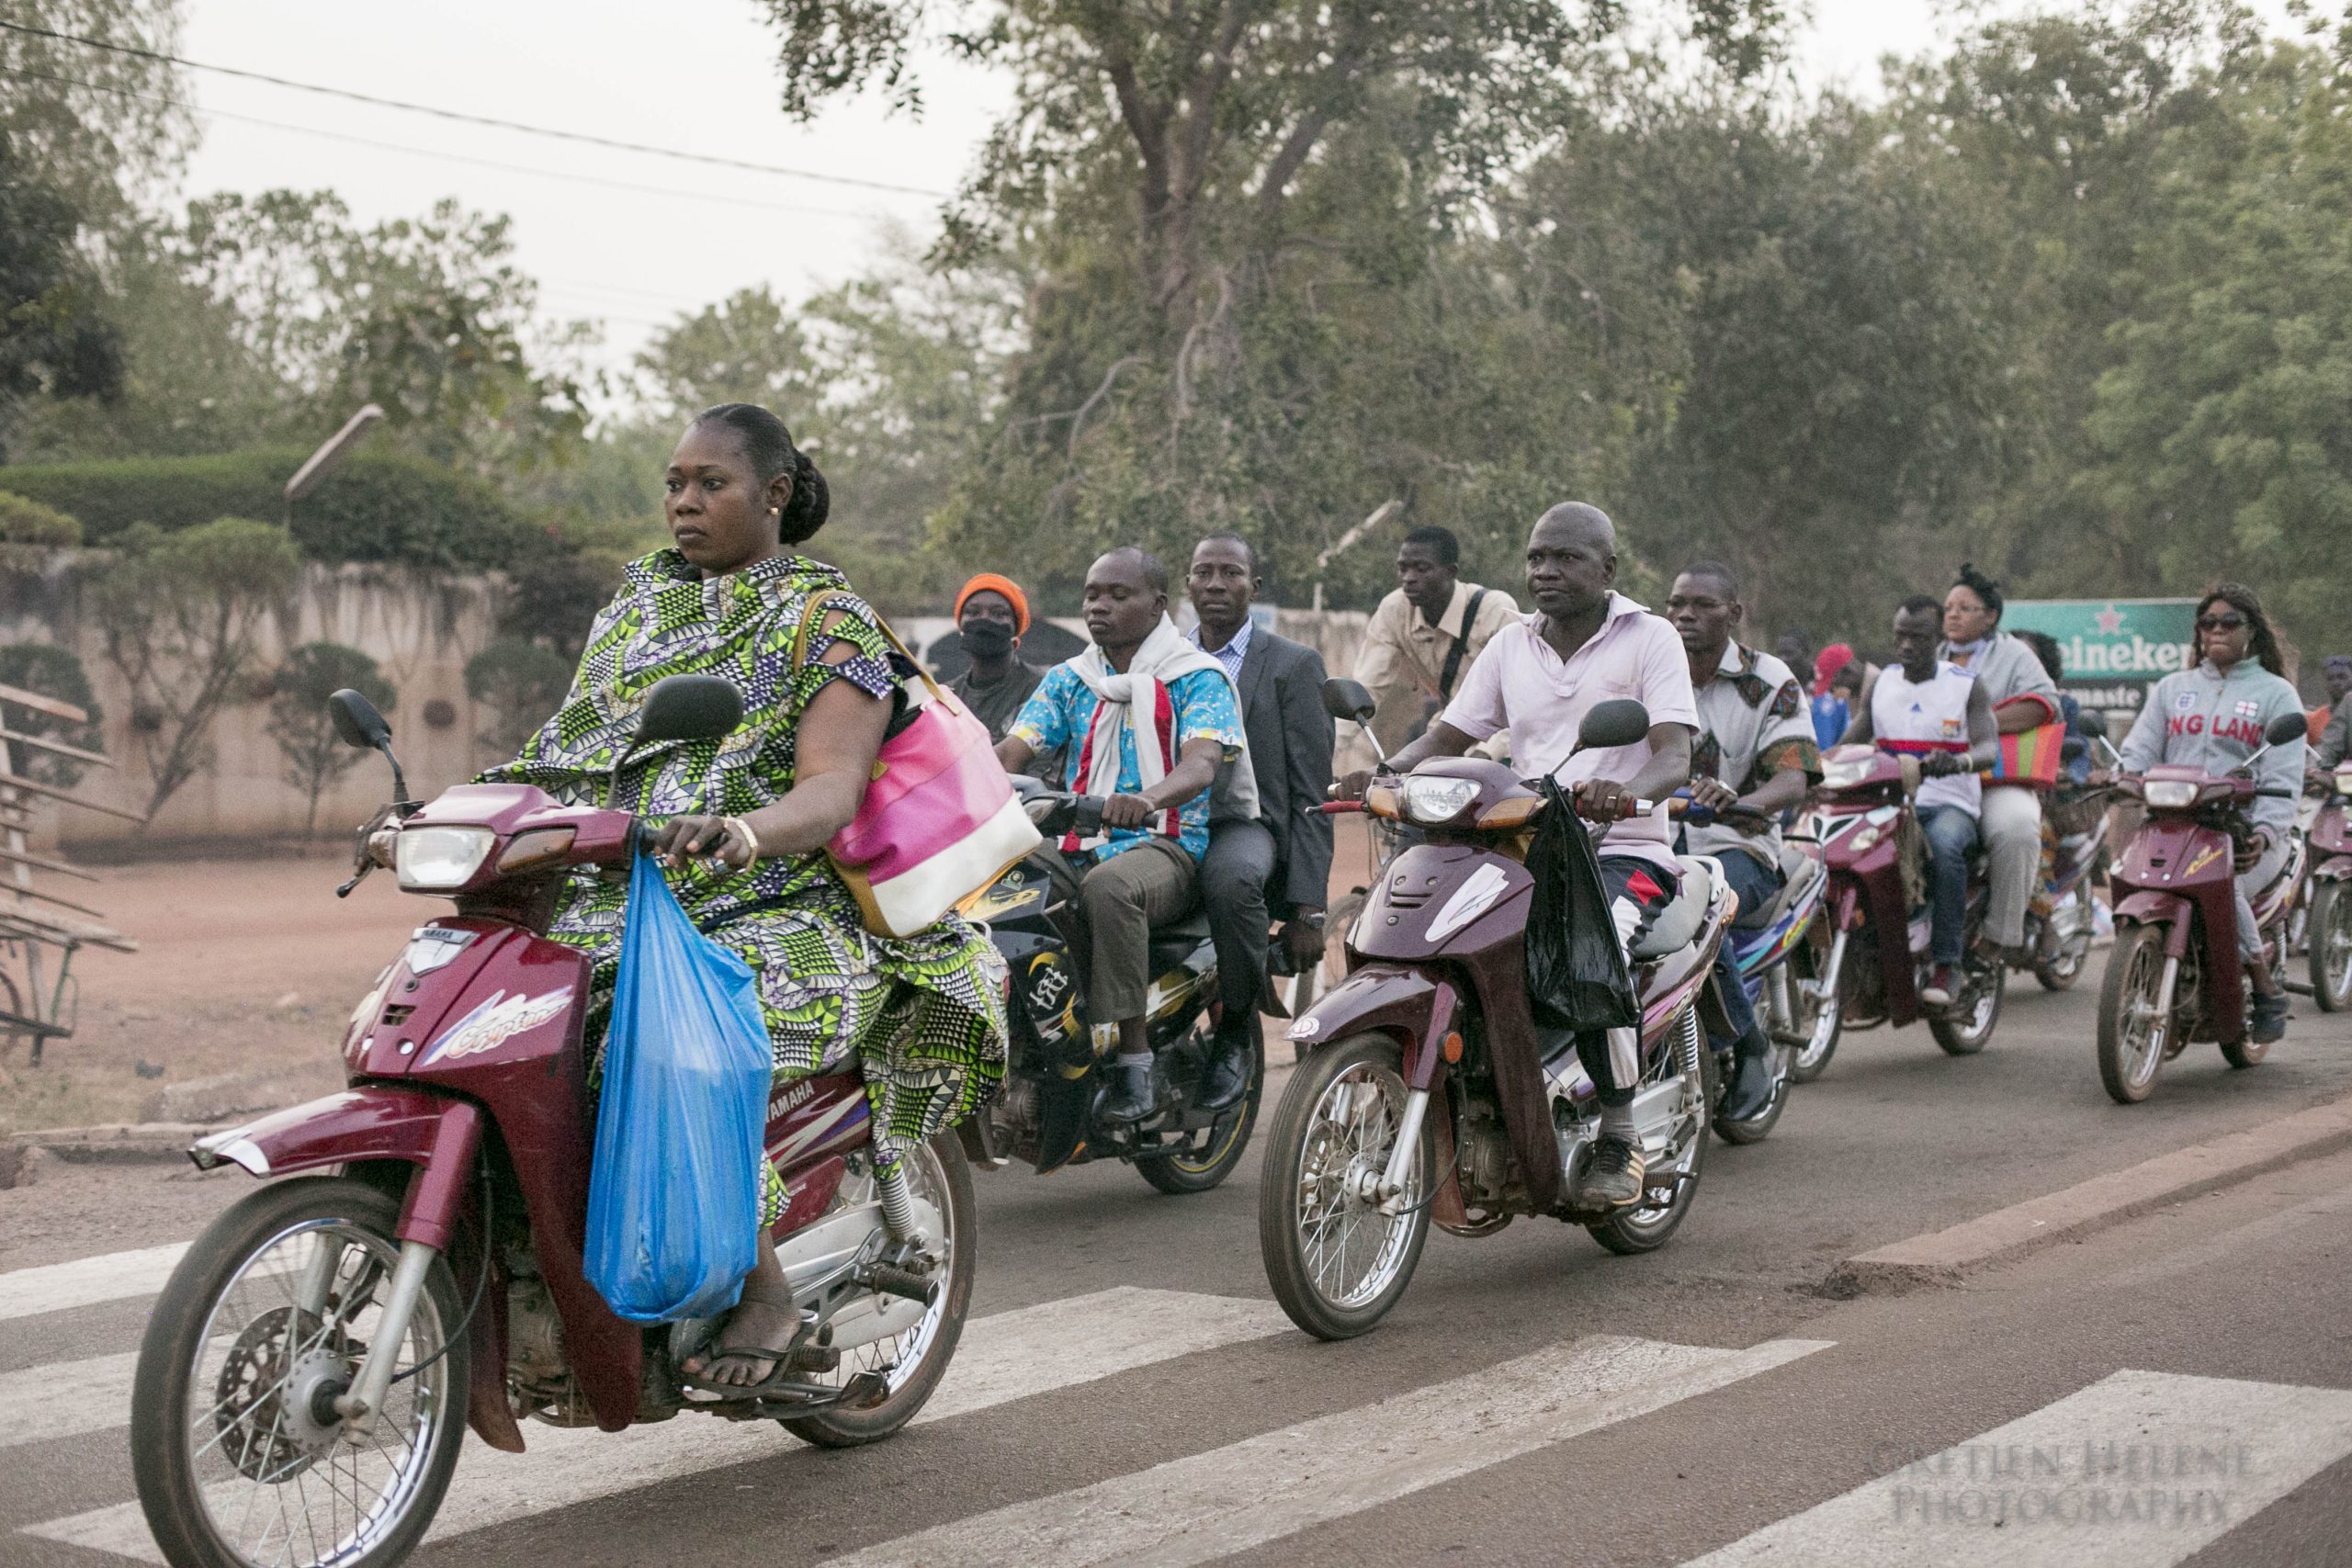 The motocycle/bike lane for commuters. Ouagadougou, Burkina Faso